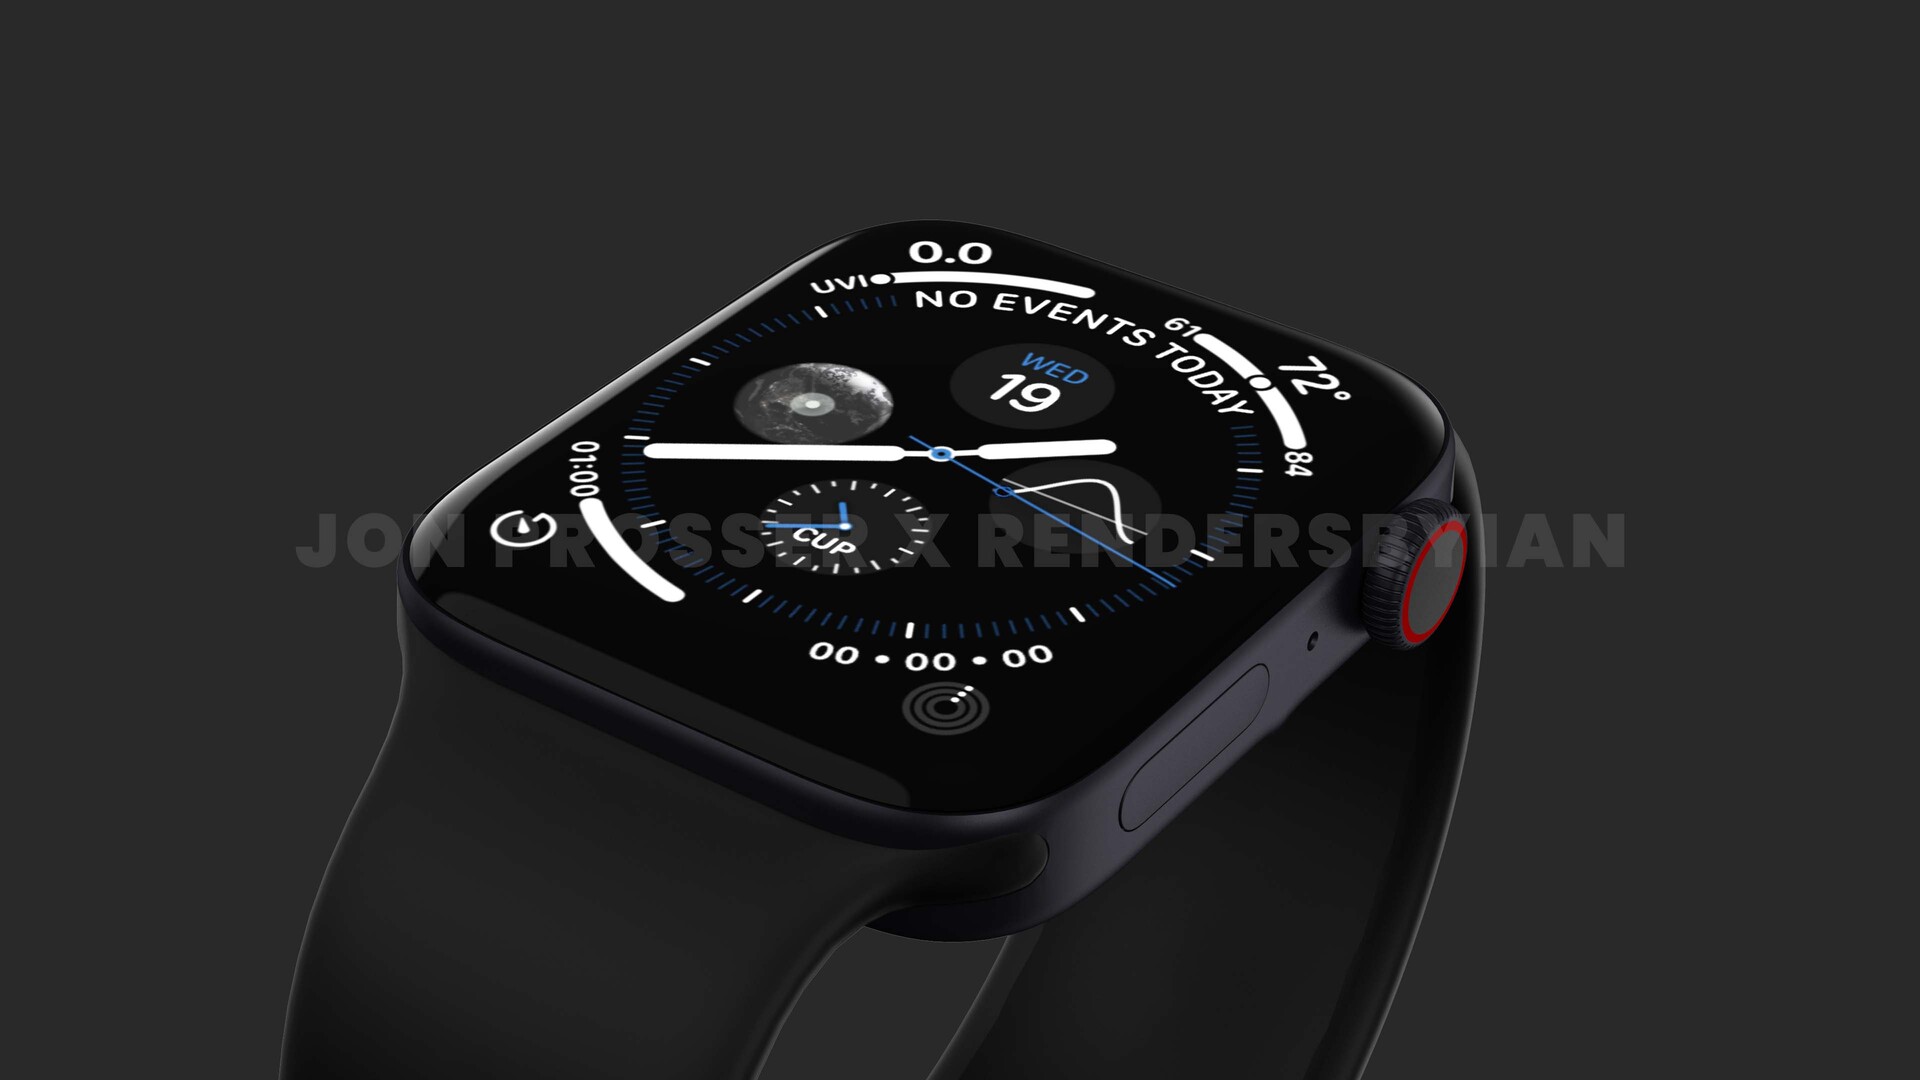 Apple Watch Series 7 changes detailed, including a fingerprint scanner